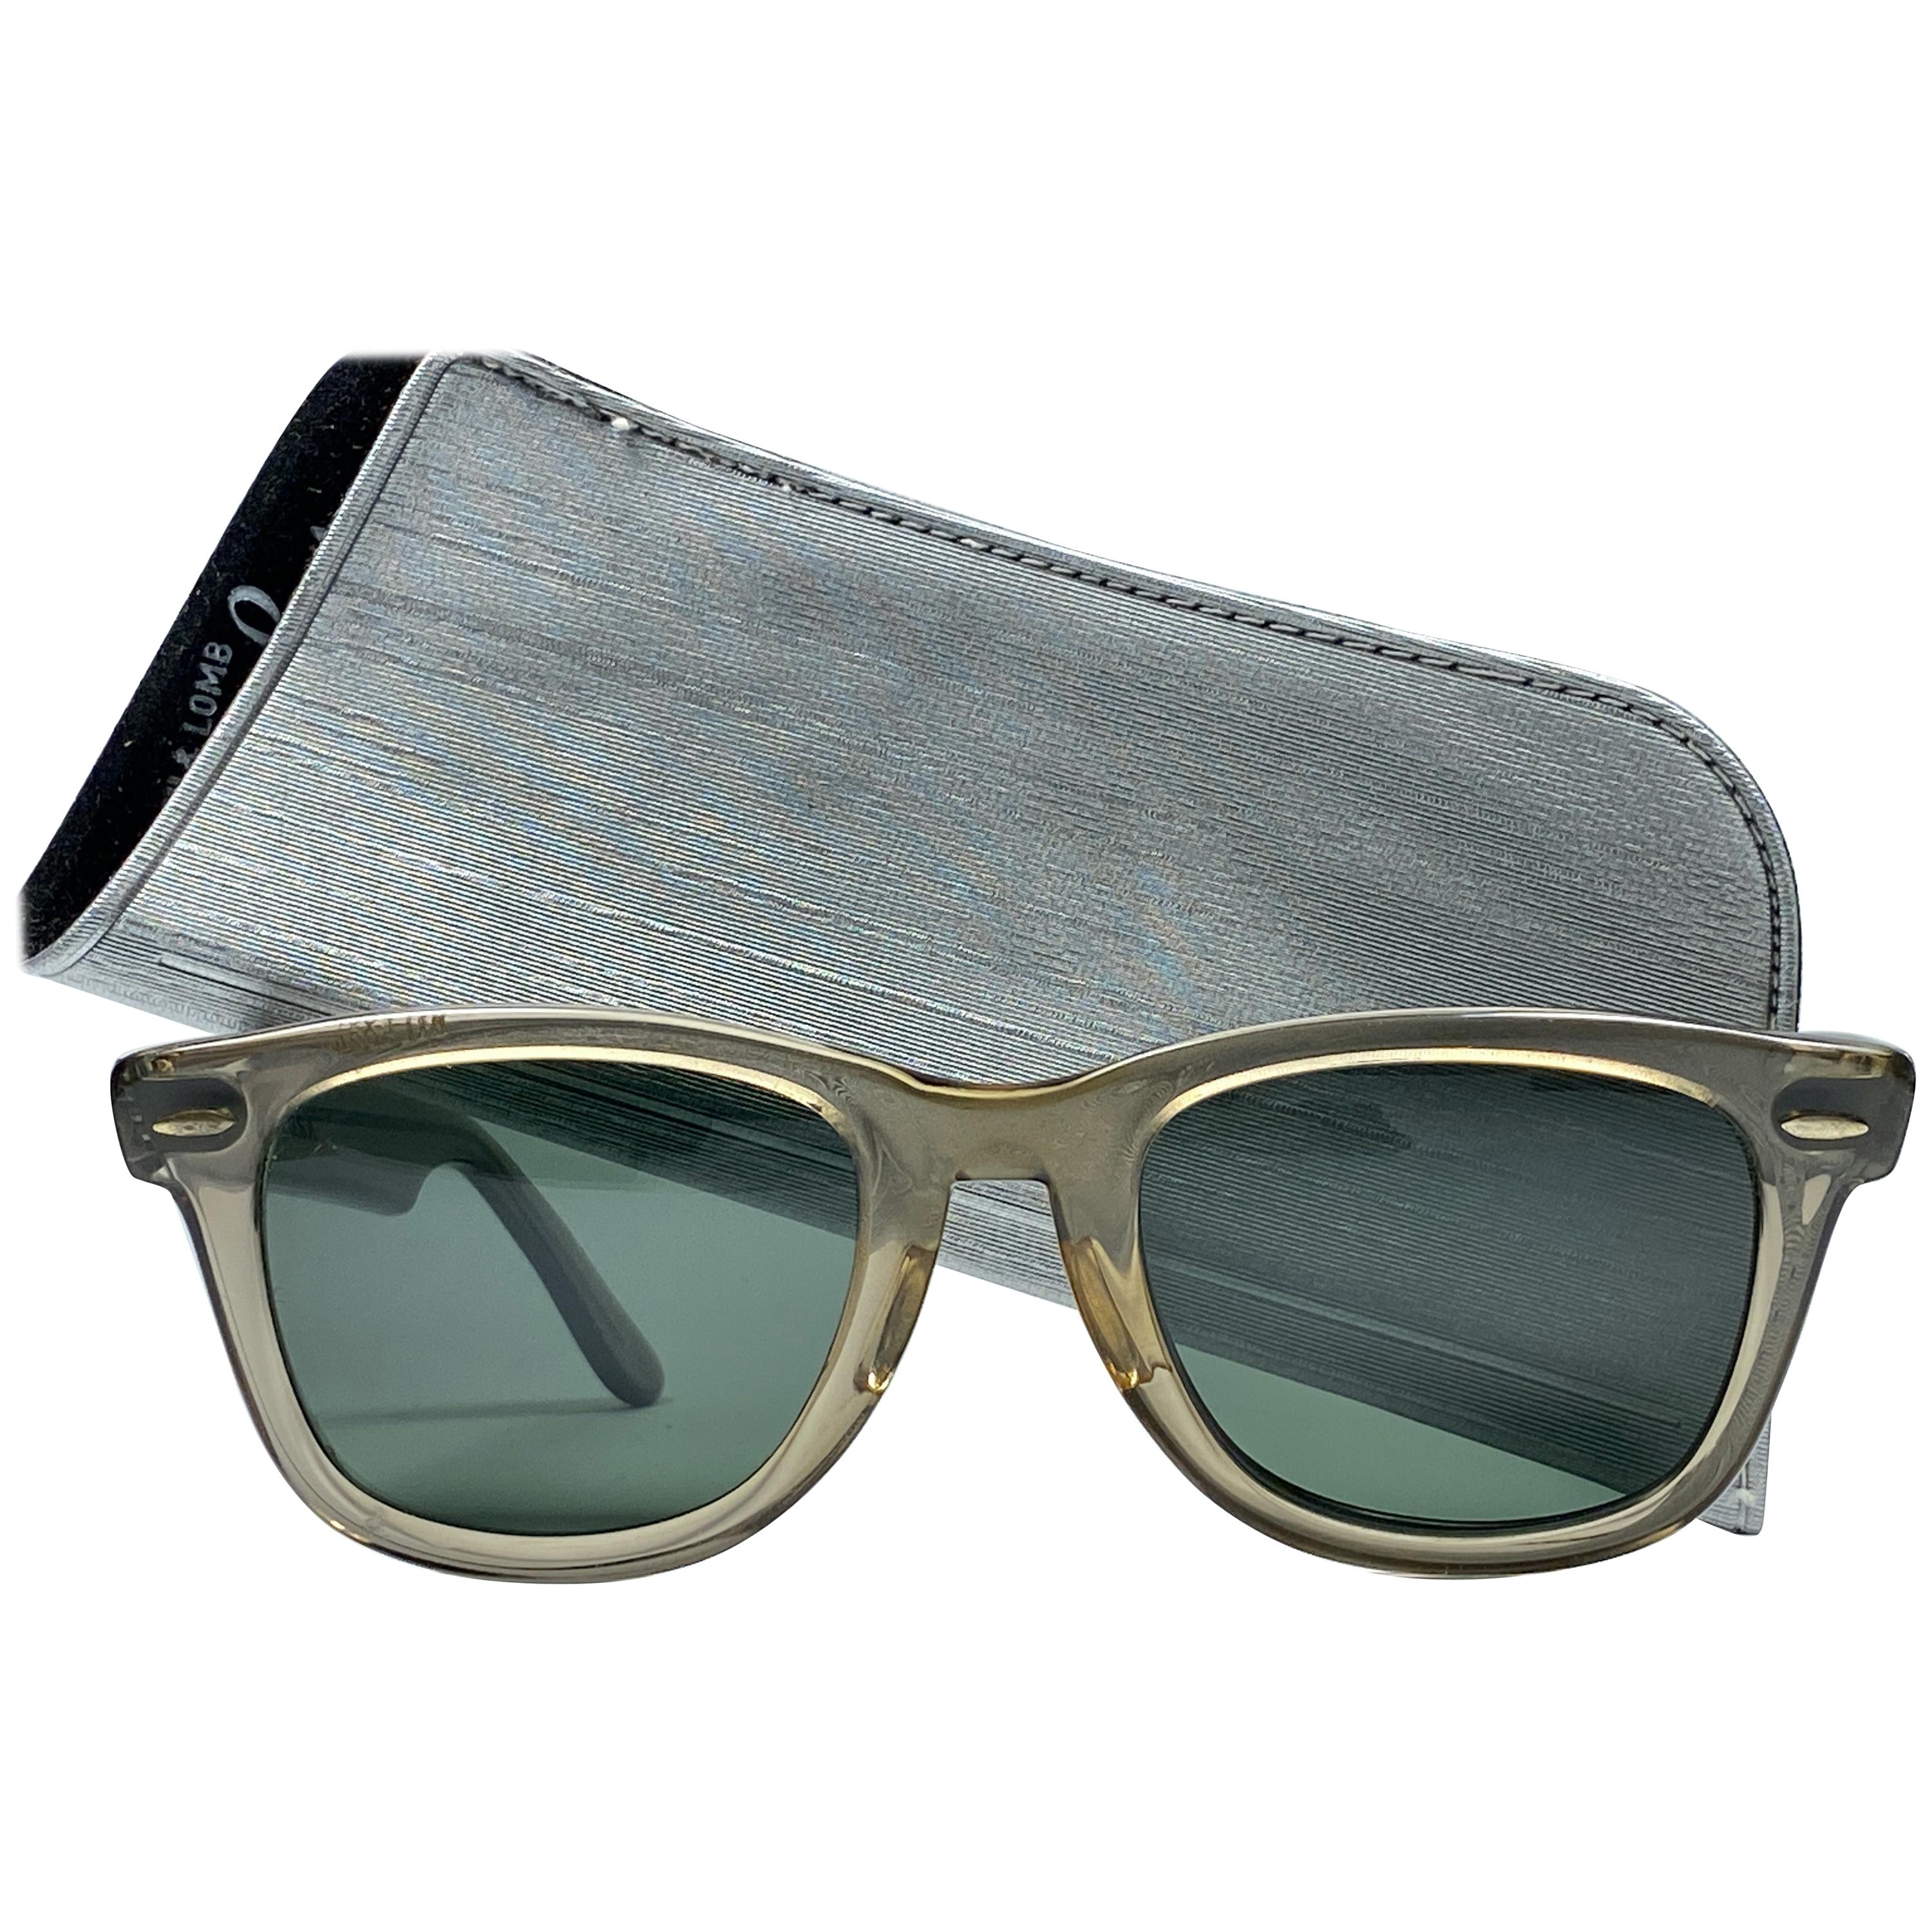 Mint Ray Ban Wayfarer 5024 1970's Translucent Grey Lenses B&L USA Sunglasses